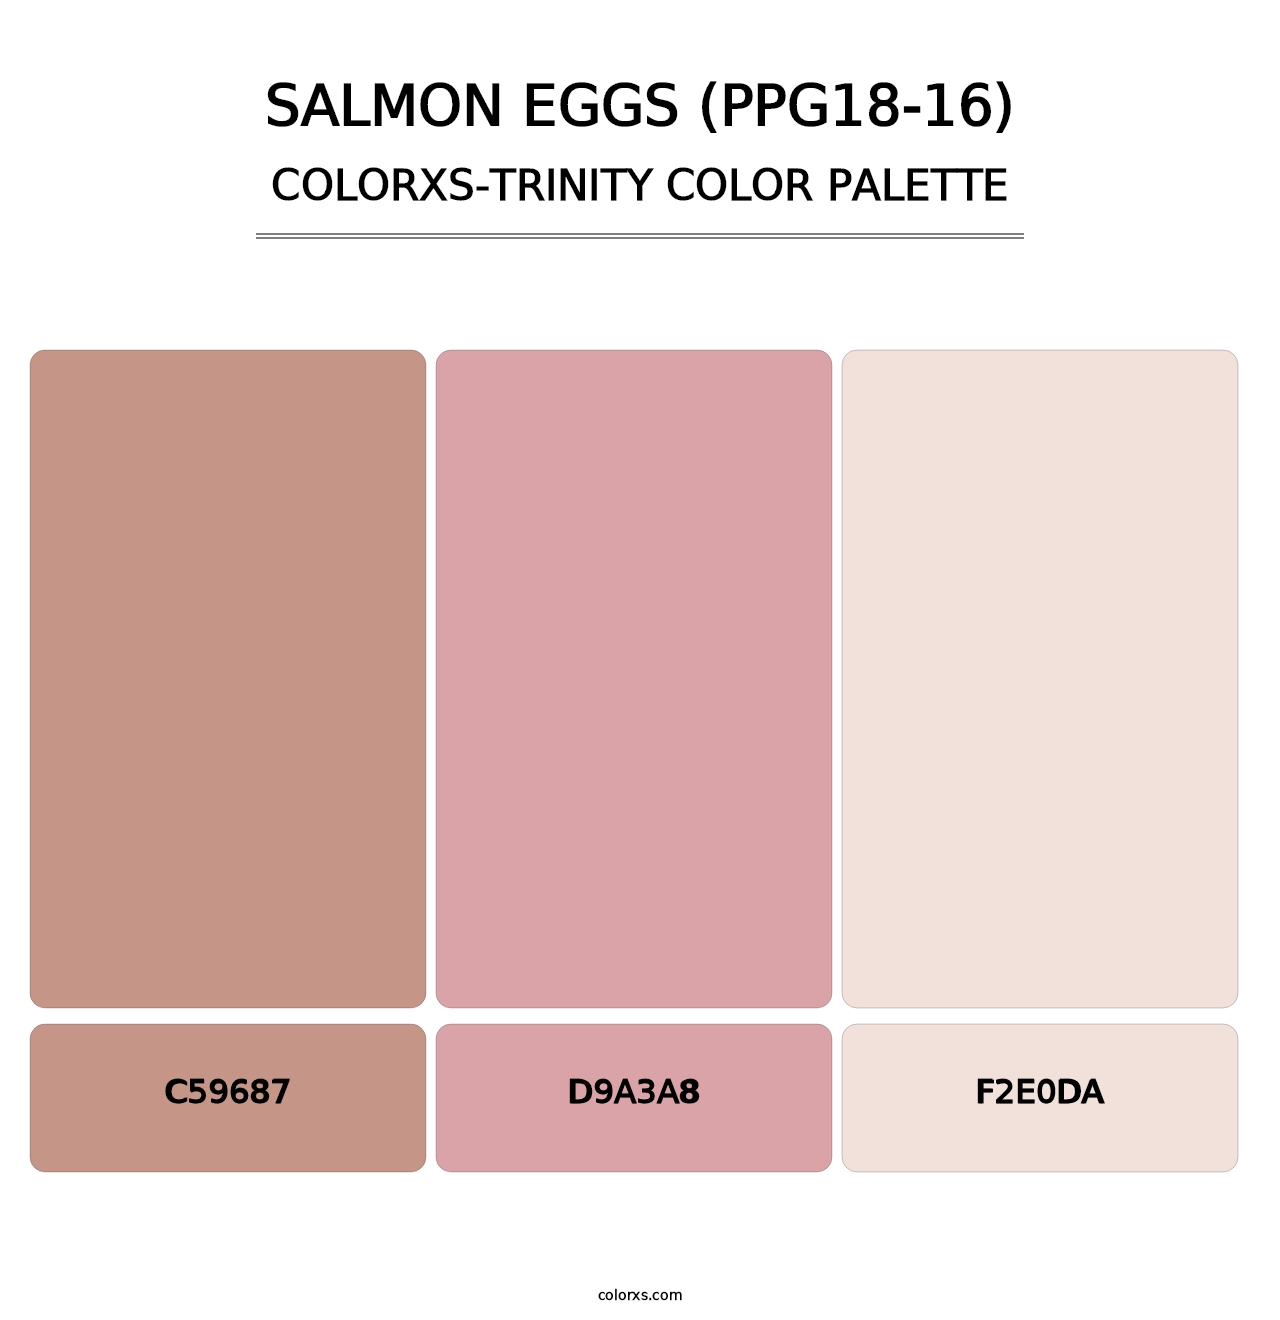 Salmon Eggs (PPG18-16) - Colorxs Trinity Palette